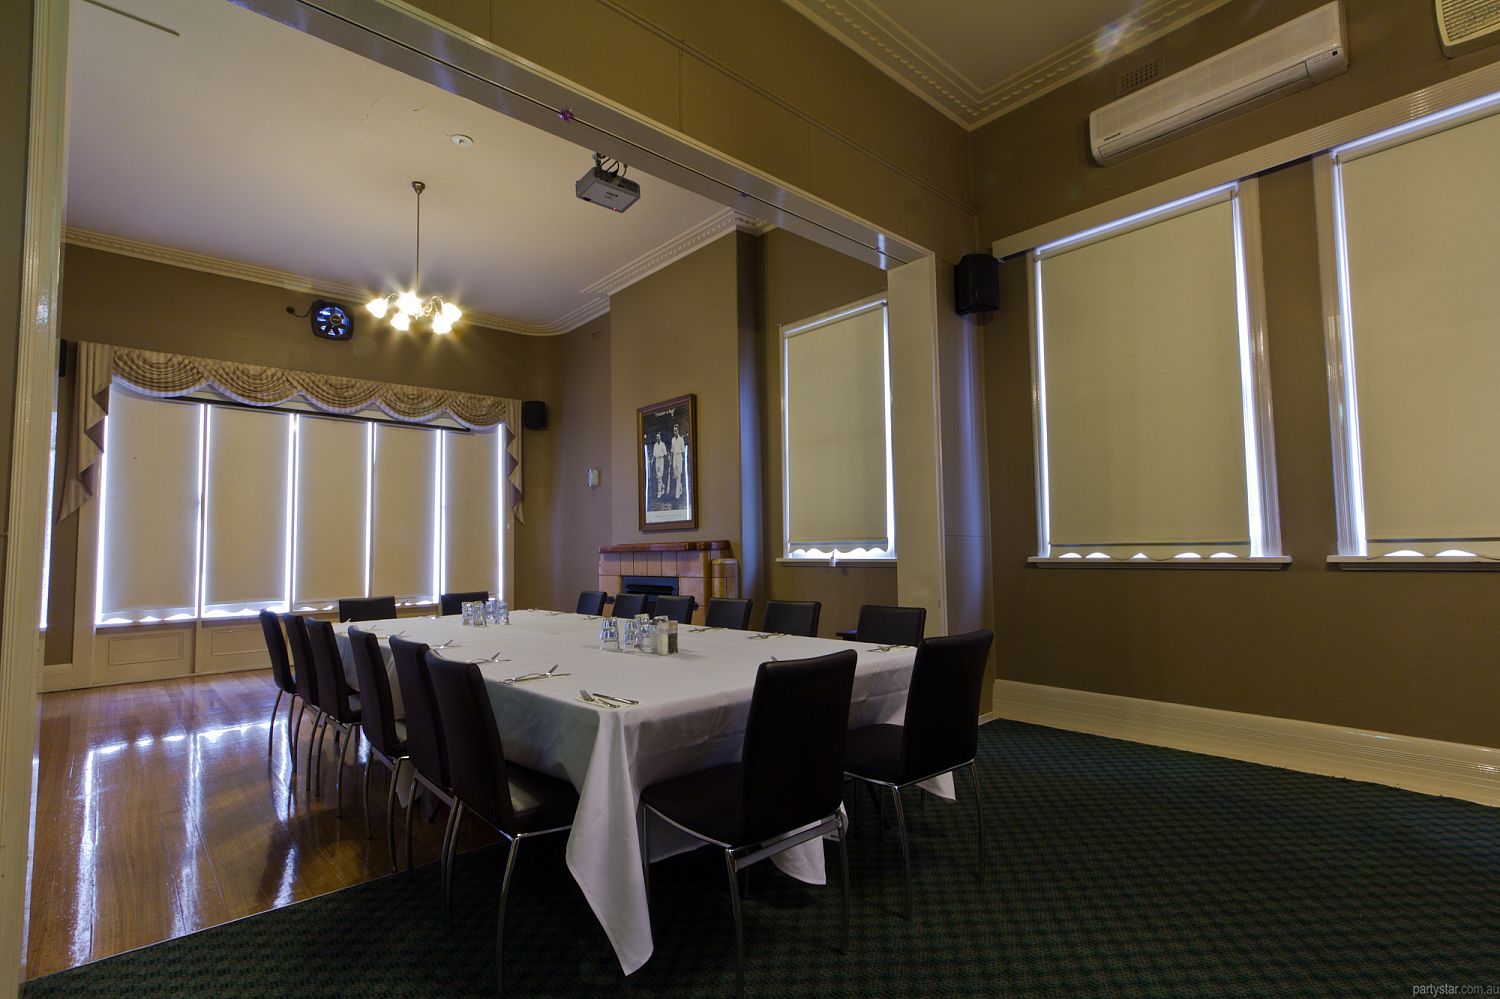 Oscar's Hotel, Ballarat, VIC. Function Room hire photo #2